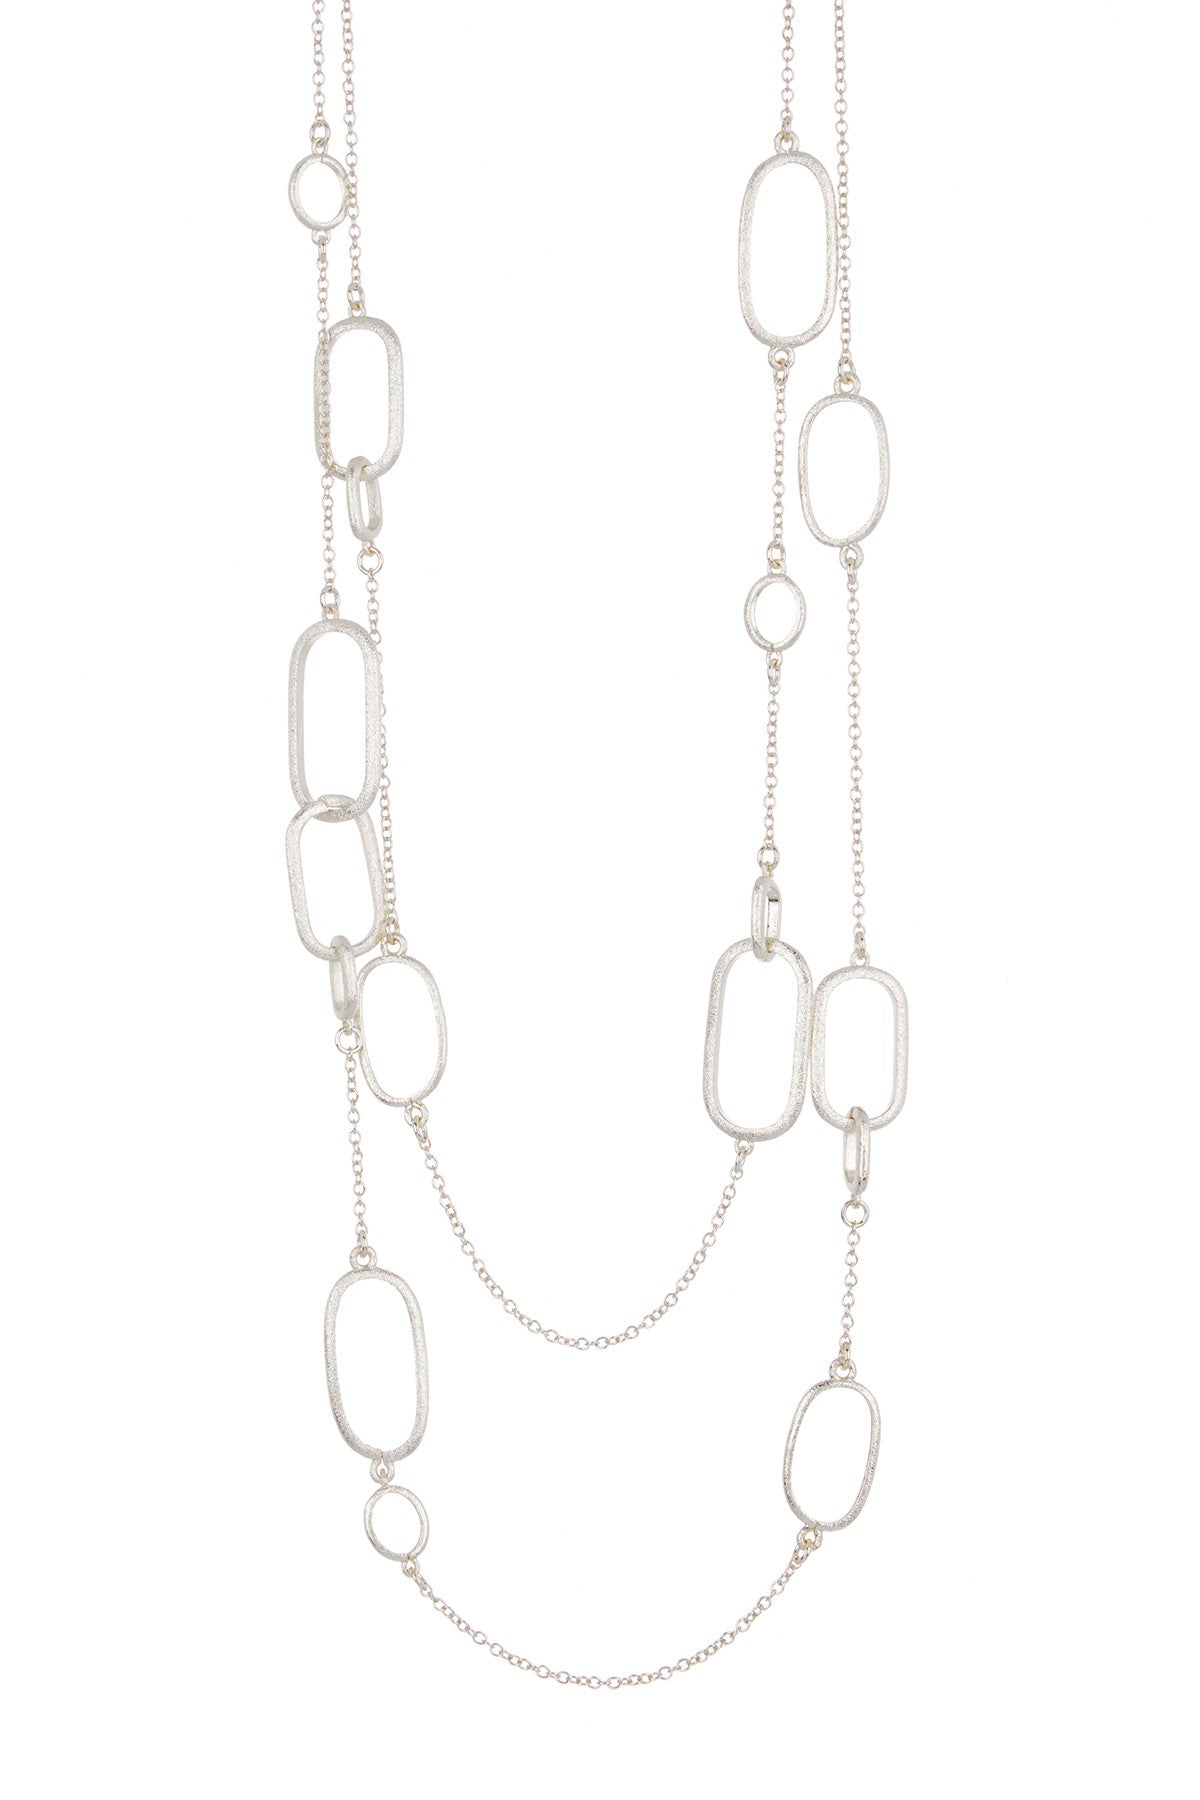 Rhodium Satin Link Layered Necklace - Closeout